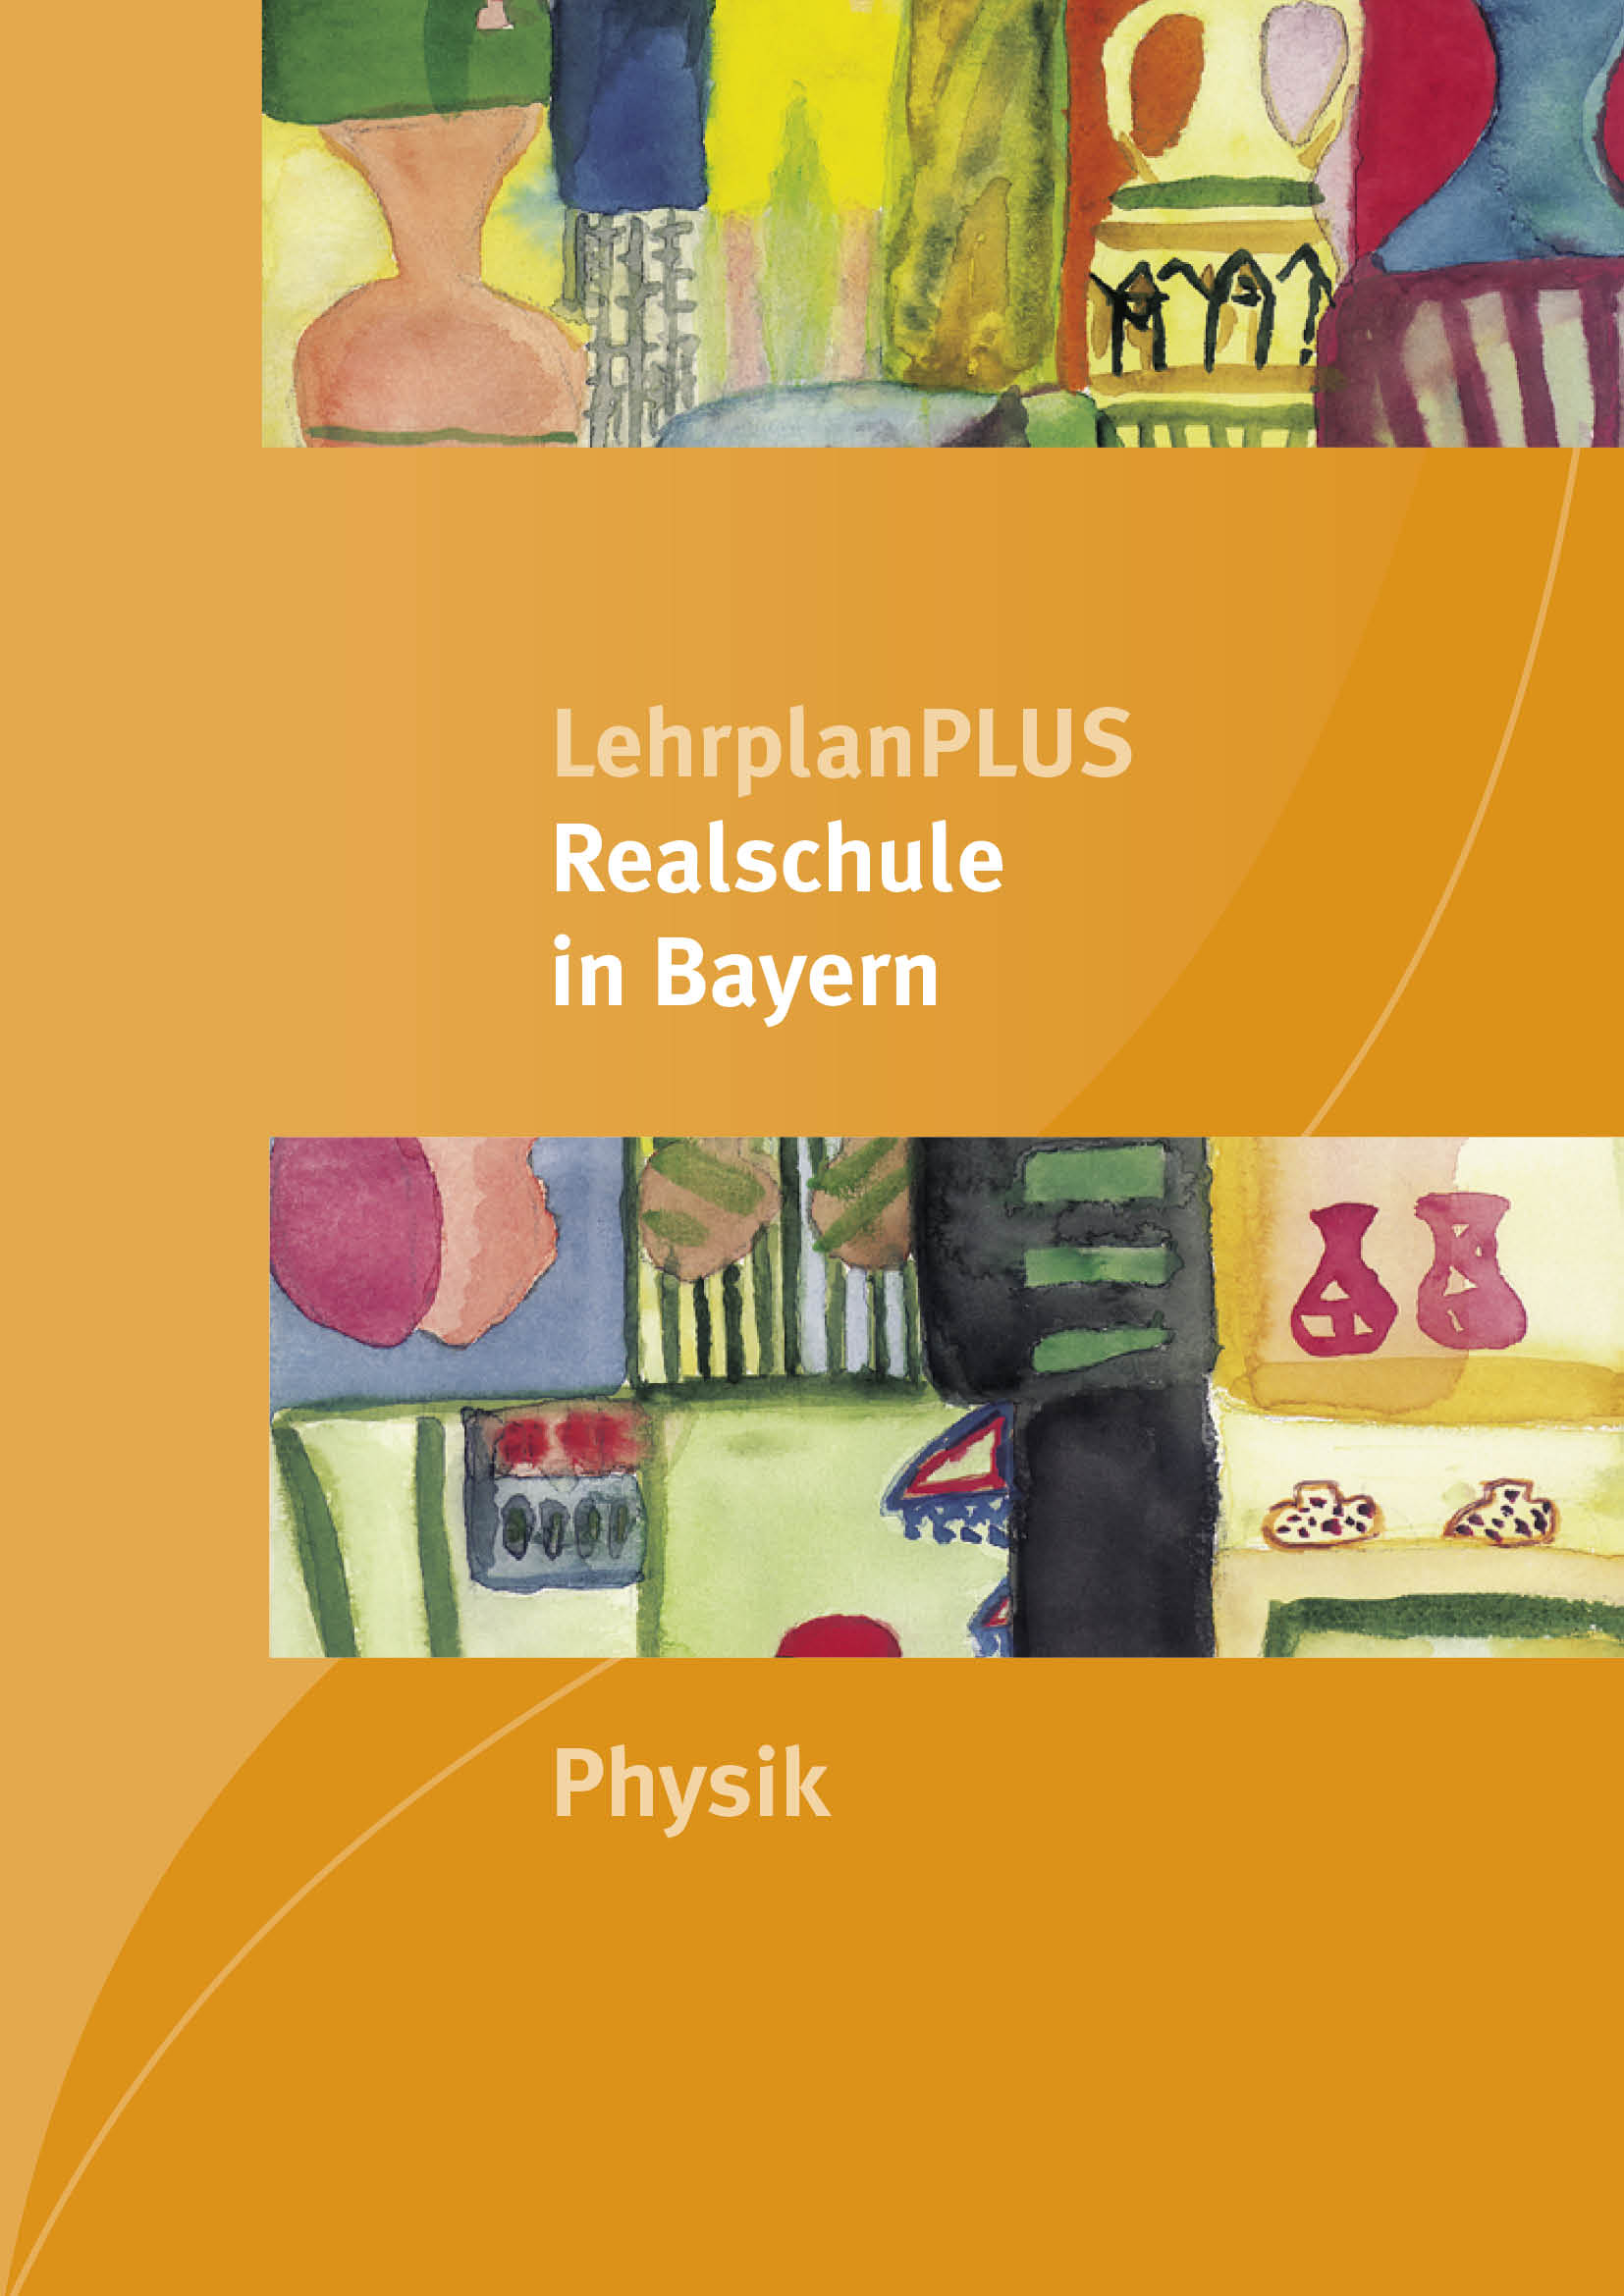 LehrplanPLUS Realschule in Bayern - Physik